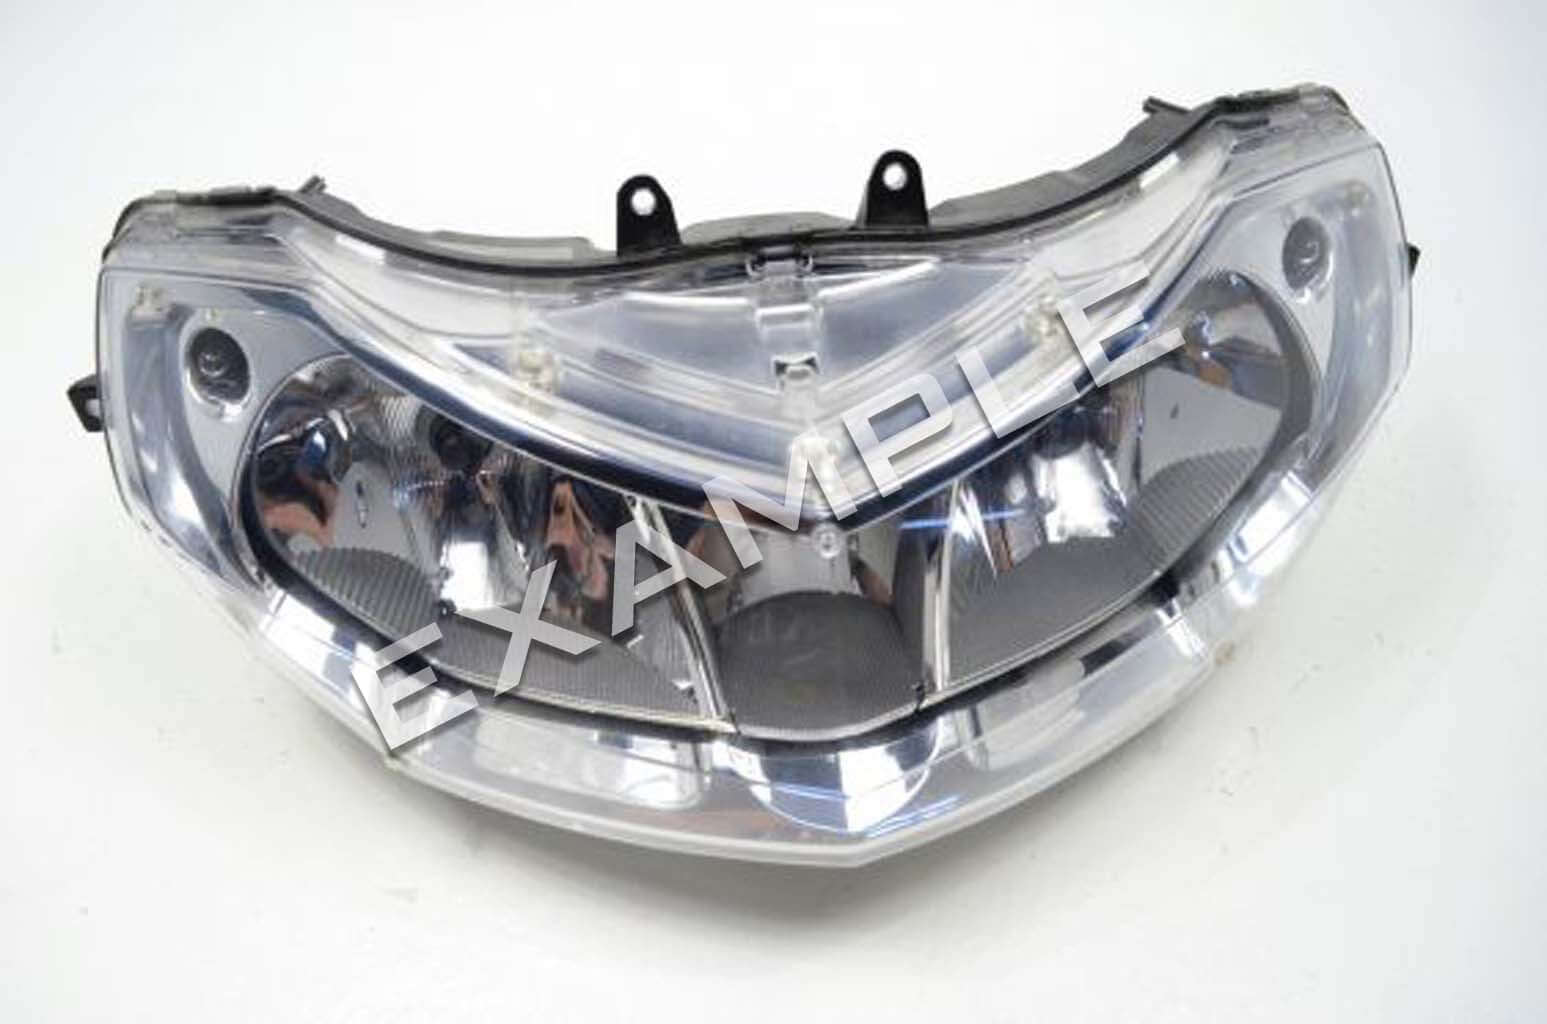 BMW R1200RT (2005-2013) headlight upgrade HID xenon kit